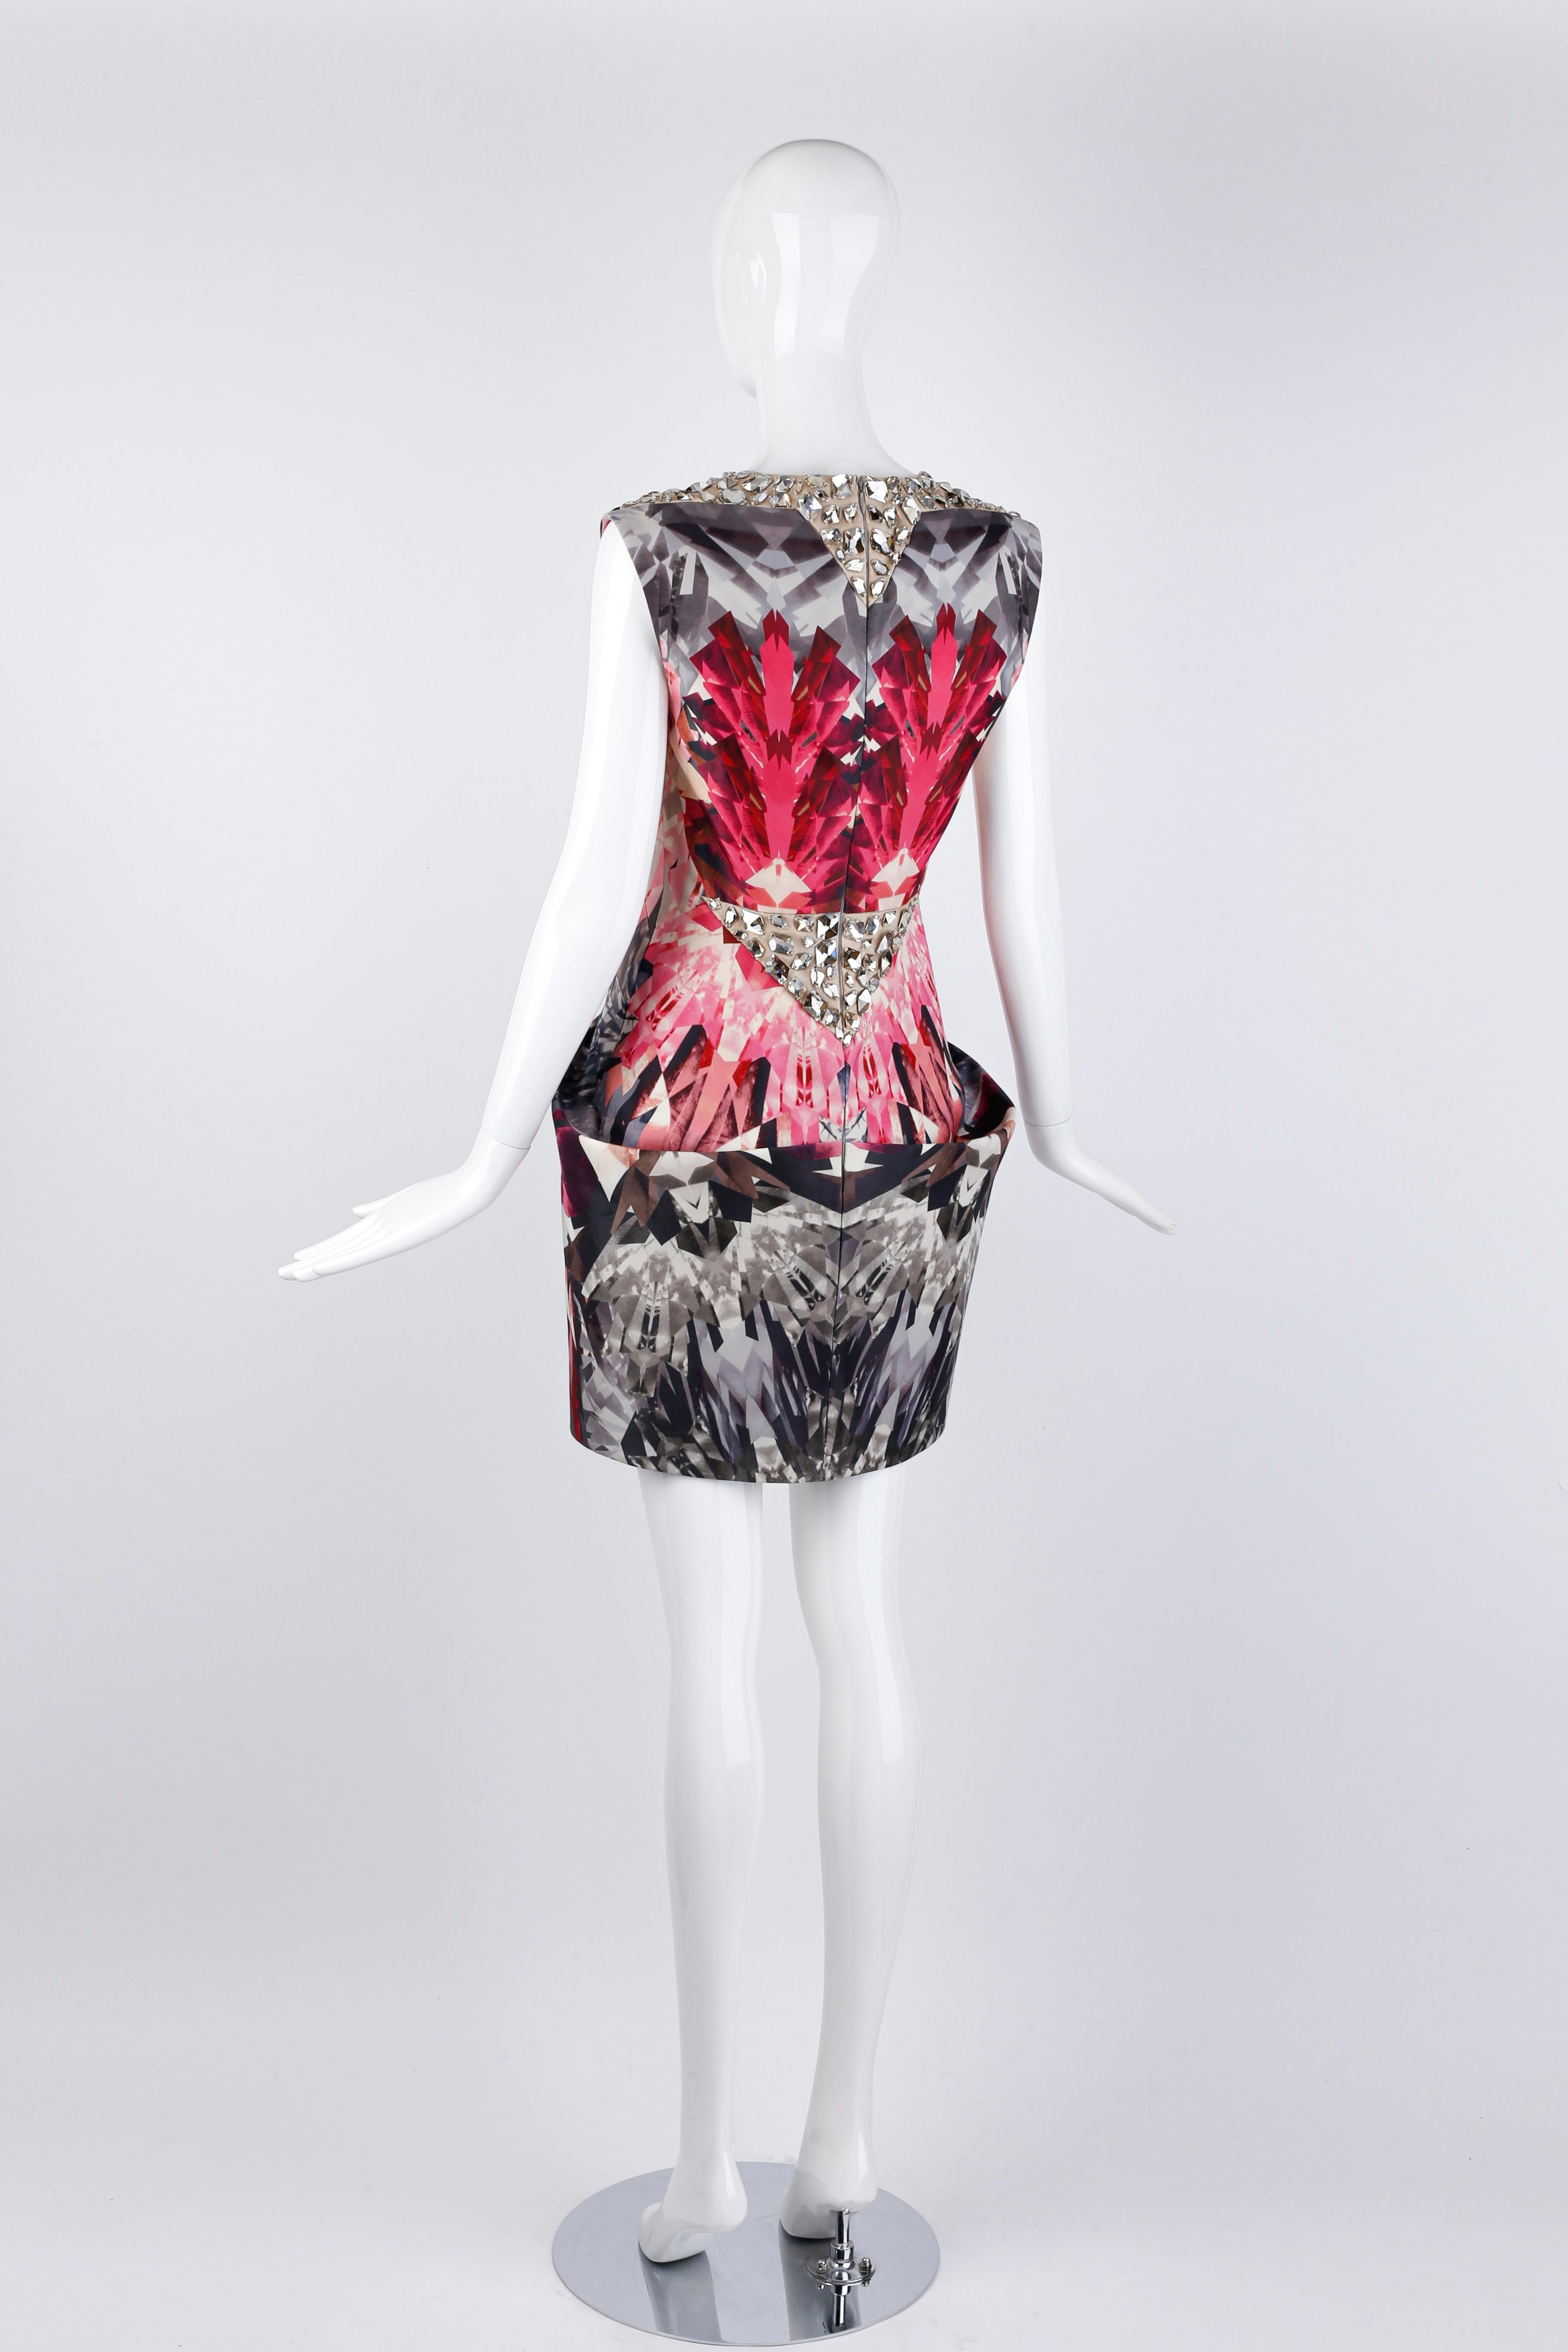 Alexander McQueen S/S 2009 Swarovski Crystal Structured Kaleidoscope Mini Dress For Sale 2